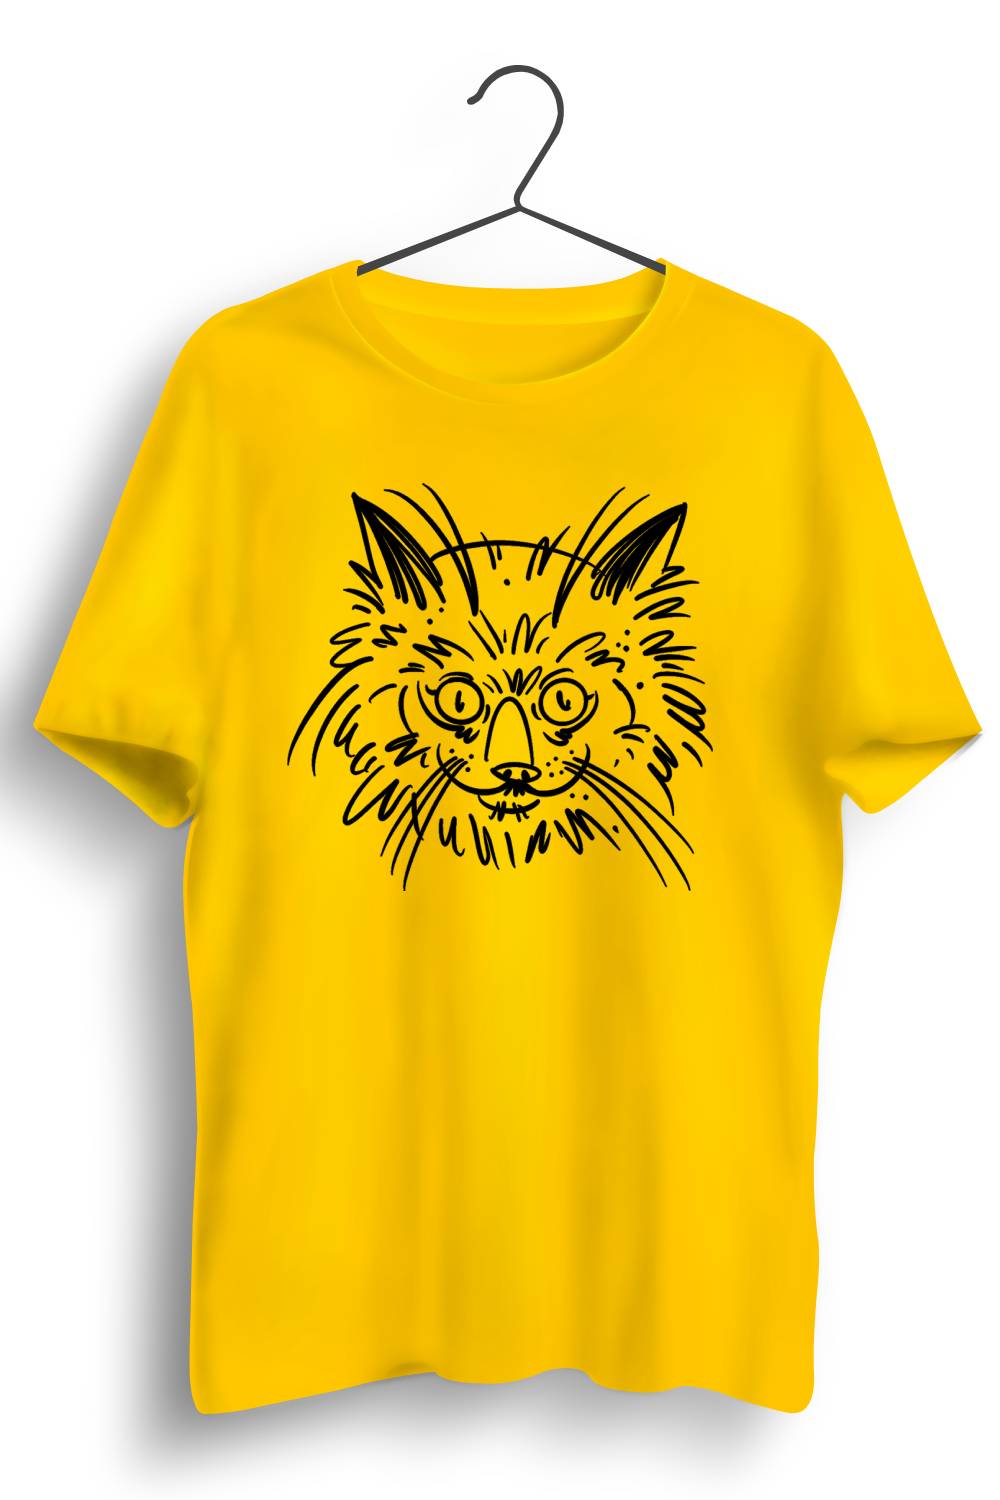 Maine Coon Cat Graphic Printed Yellow Tshirt